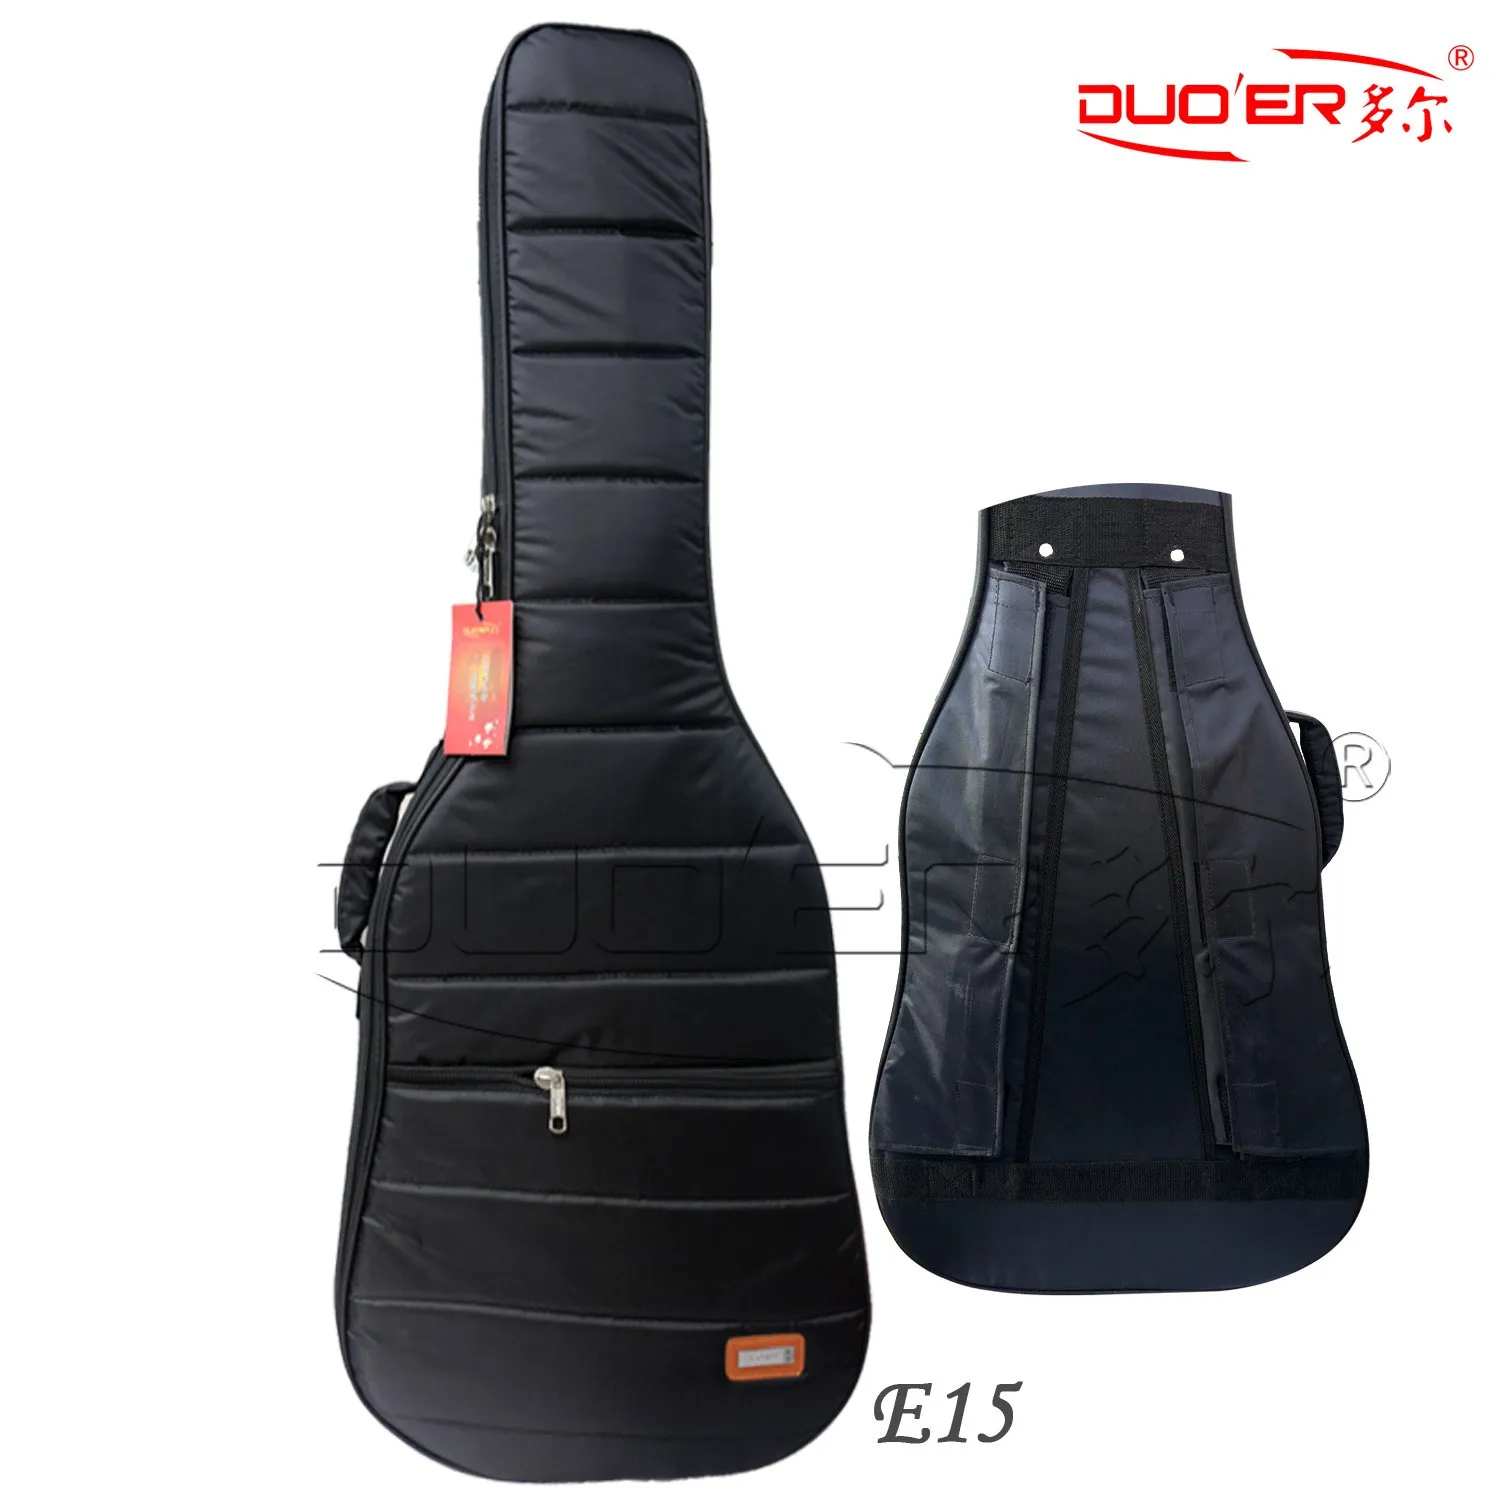 Duoer Guitar Bag Waterproof Electric Guitar Bass Bag Backpack Breathable Pocket Factory Customize Wholesale Electric Guitar Bags enlarge